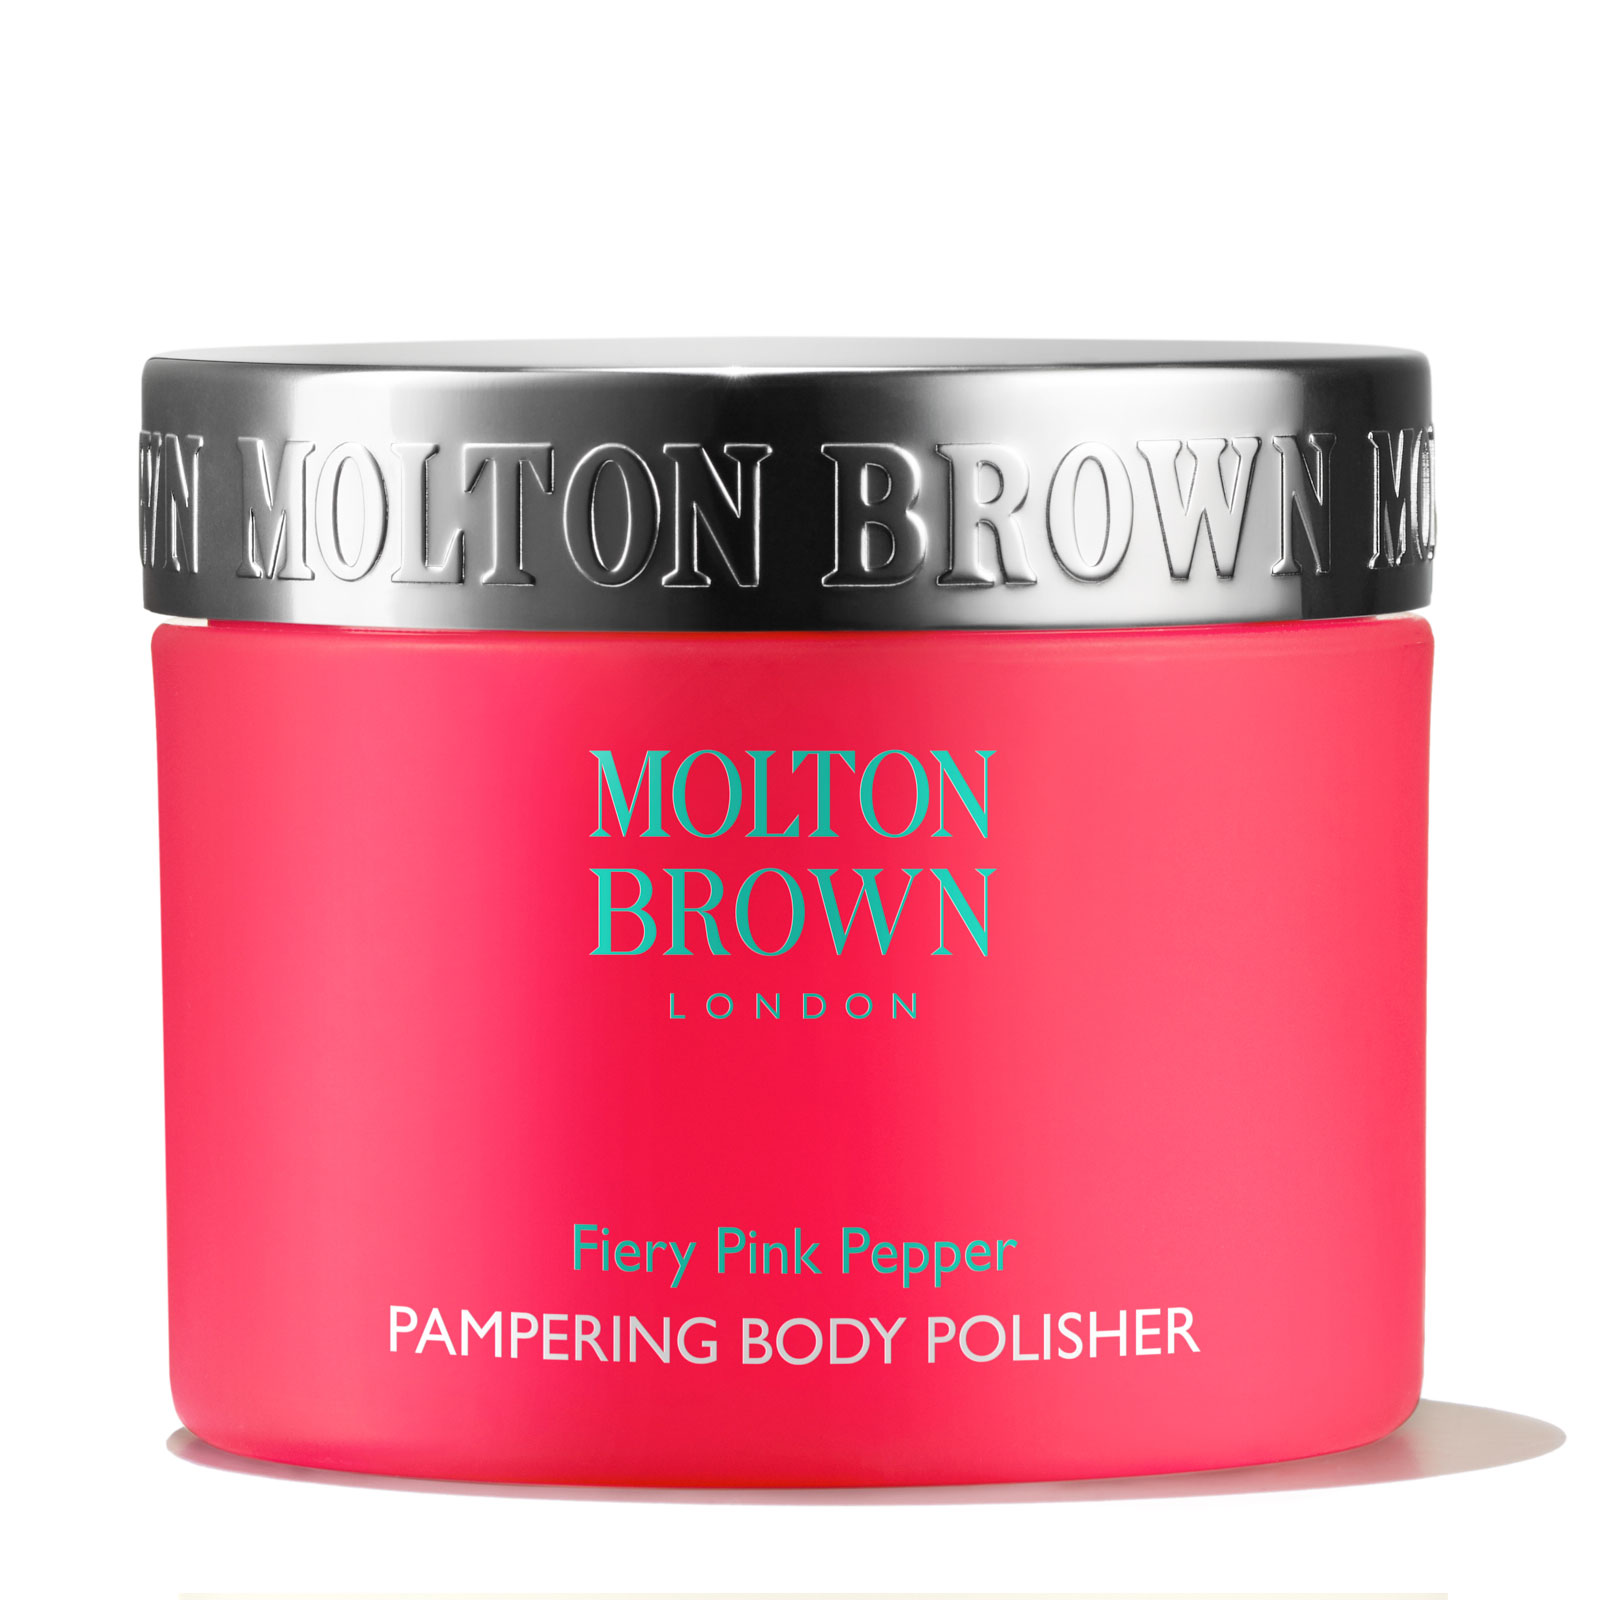 Molton Brown 摩顿布朗 粉胡椒香氛身体磨砂膏 275g